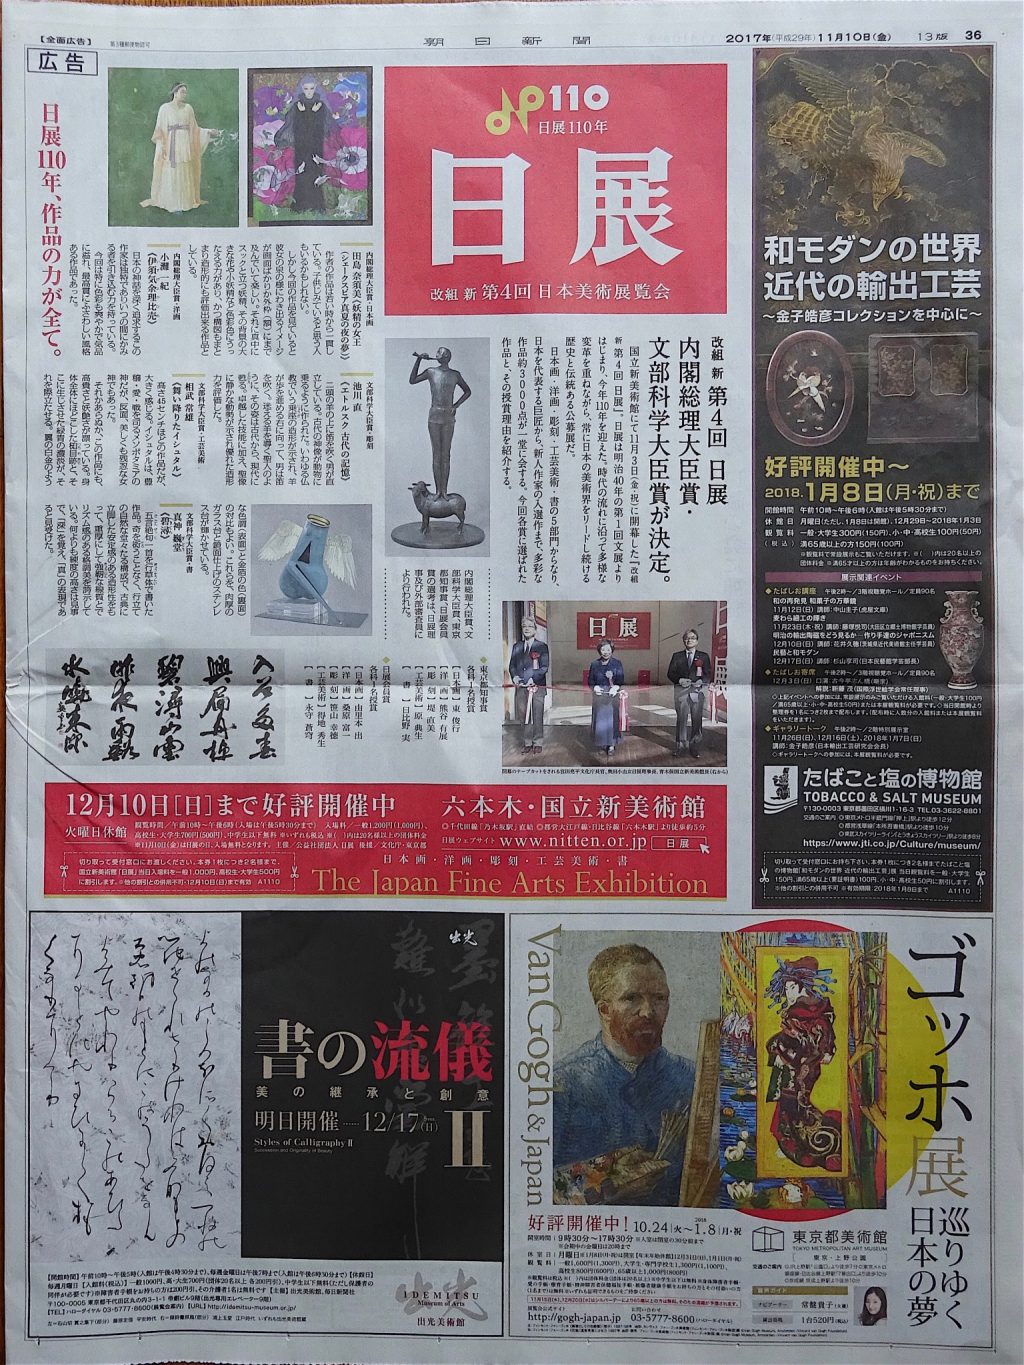 日展の四色広告 @ 朝日新聞 2017年11月10日